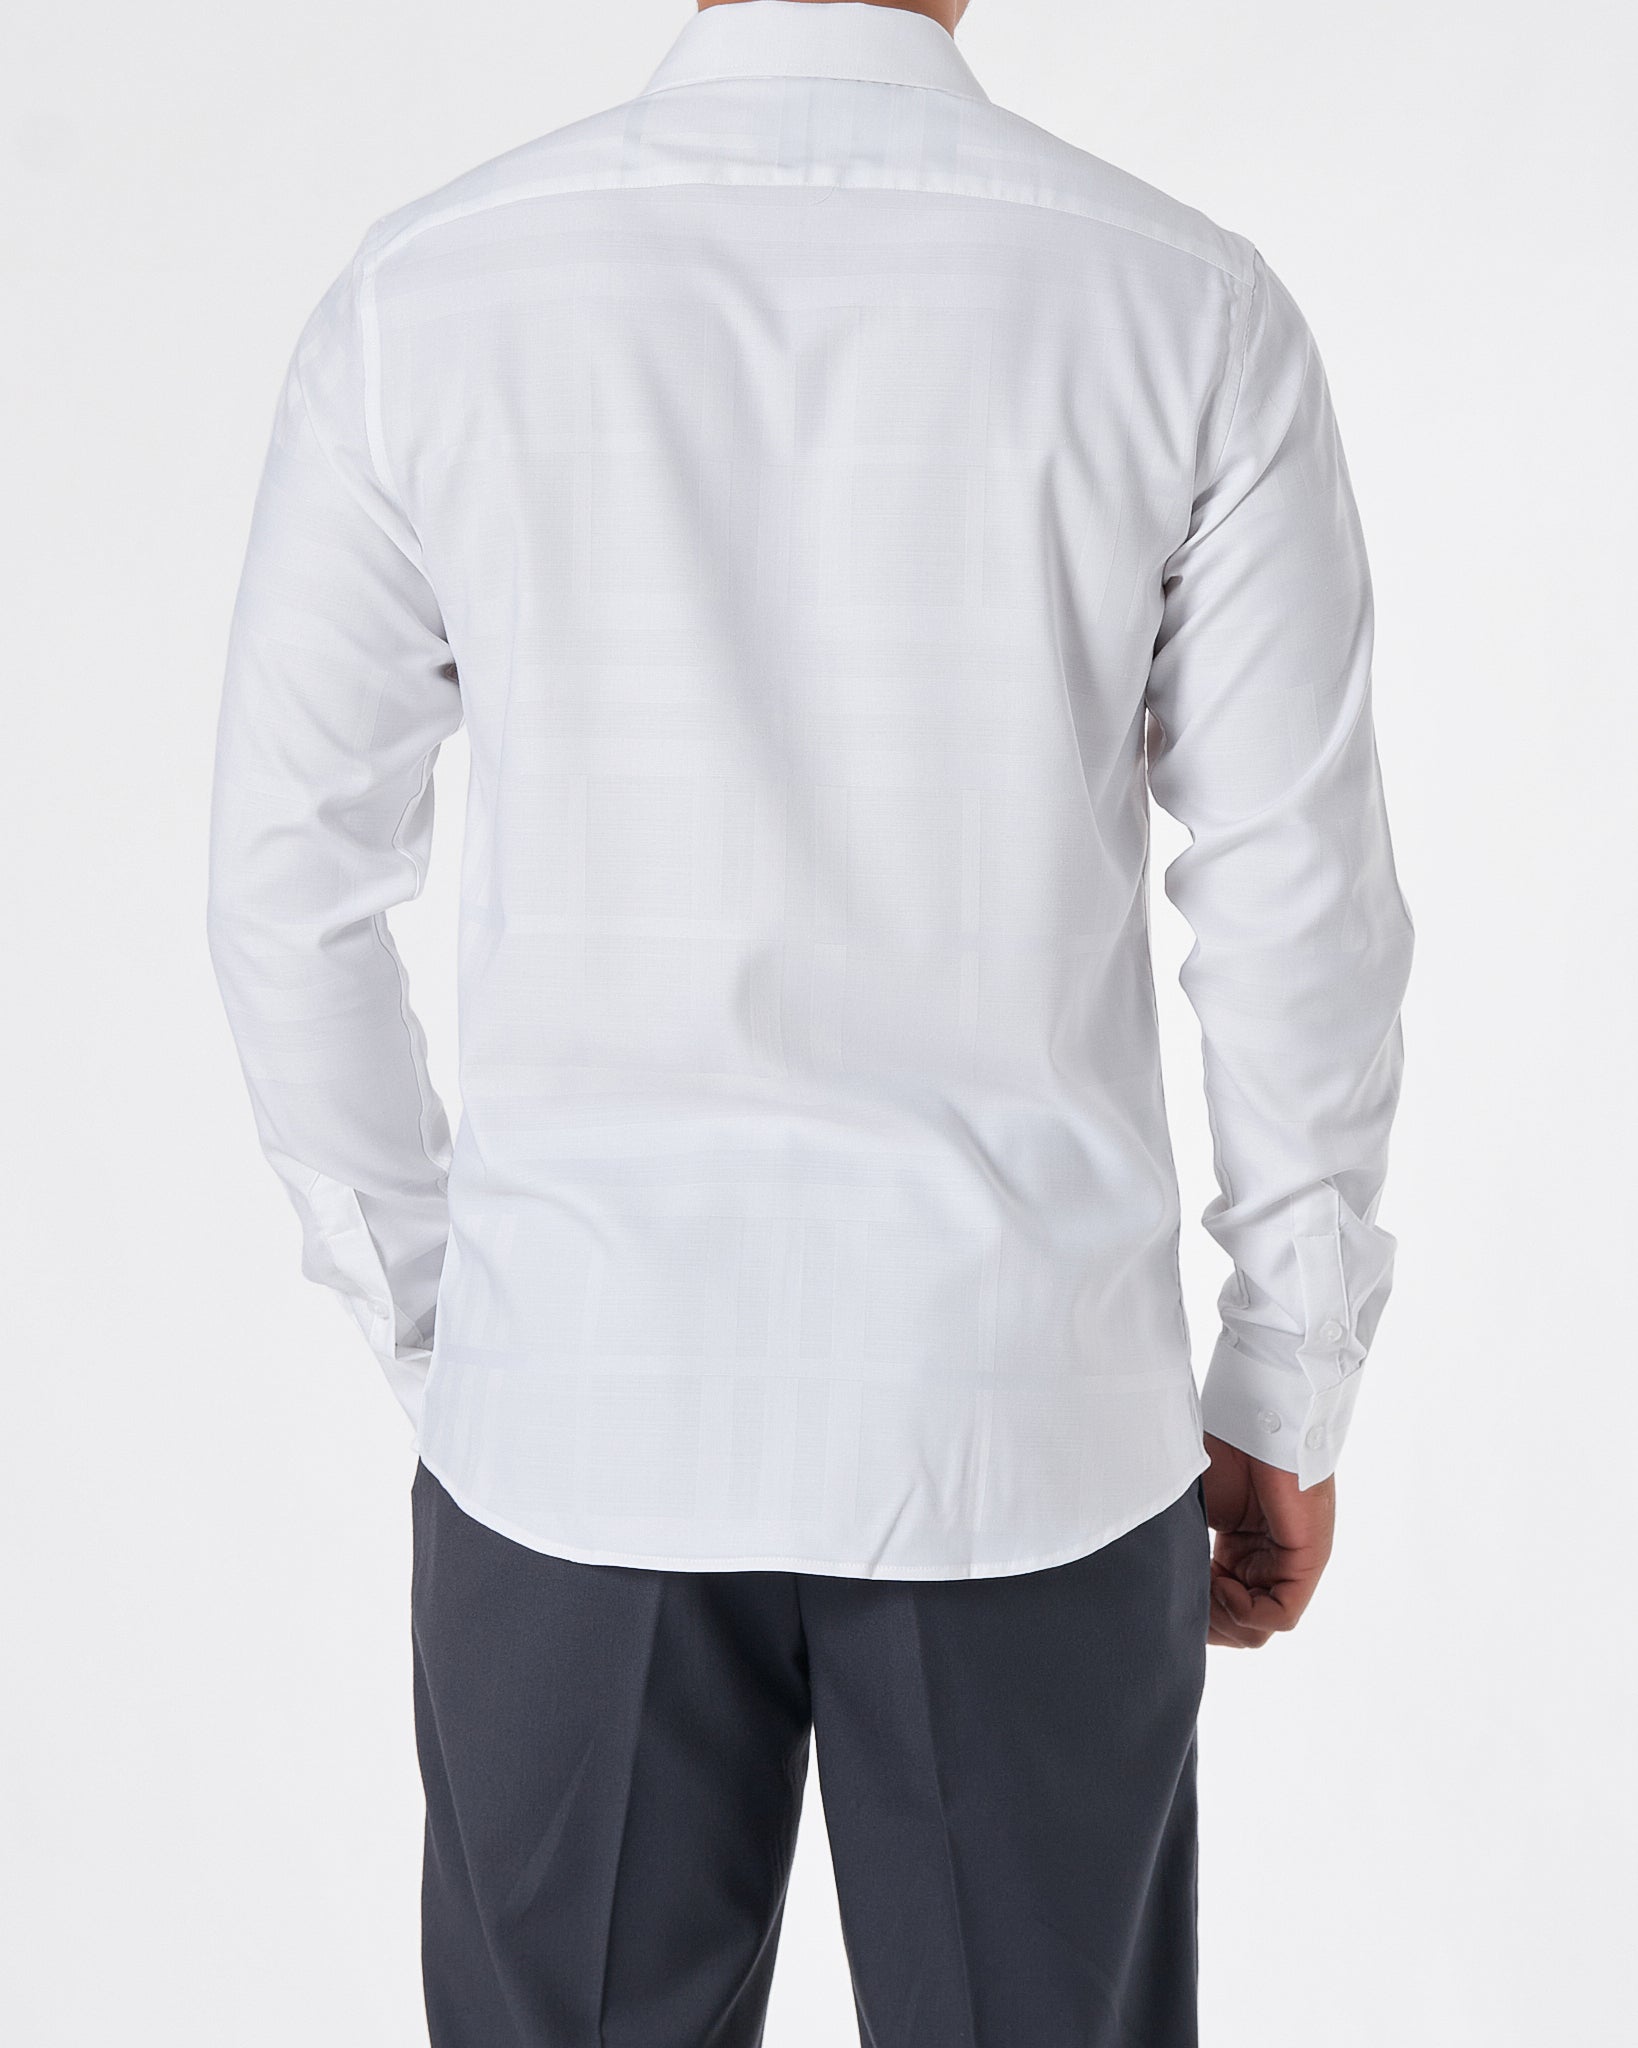 BUR Logo Embroidered Striped Men White Shirts Long Sleeve 26.90